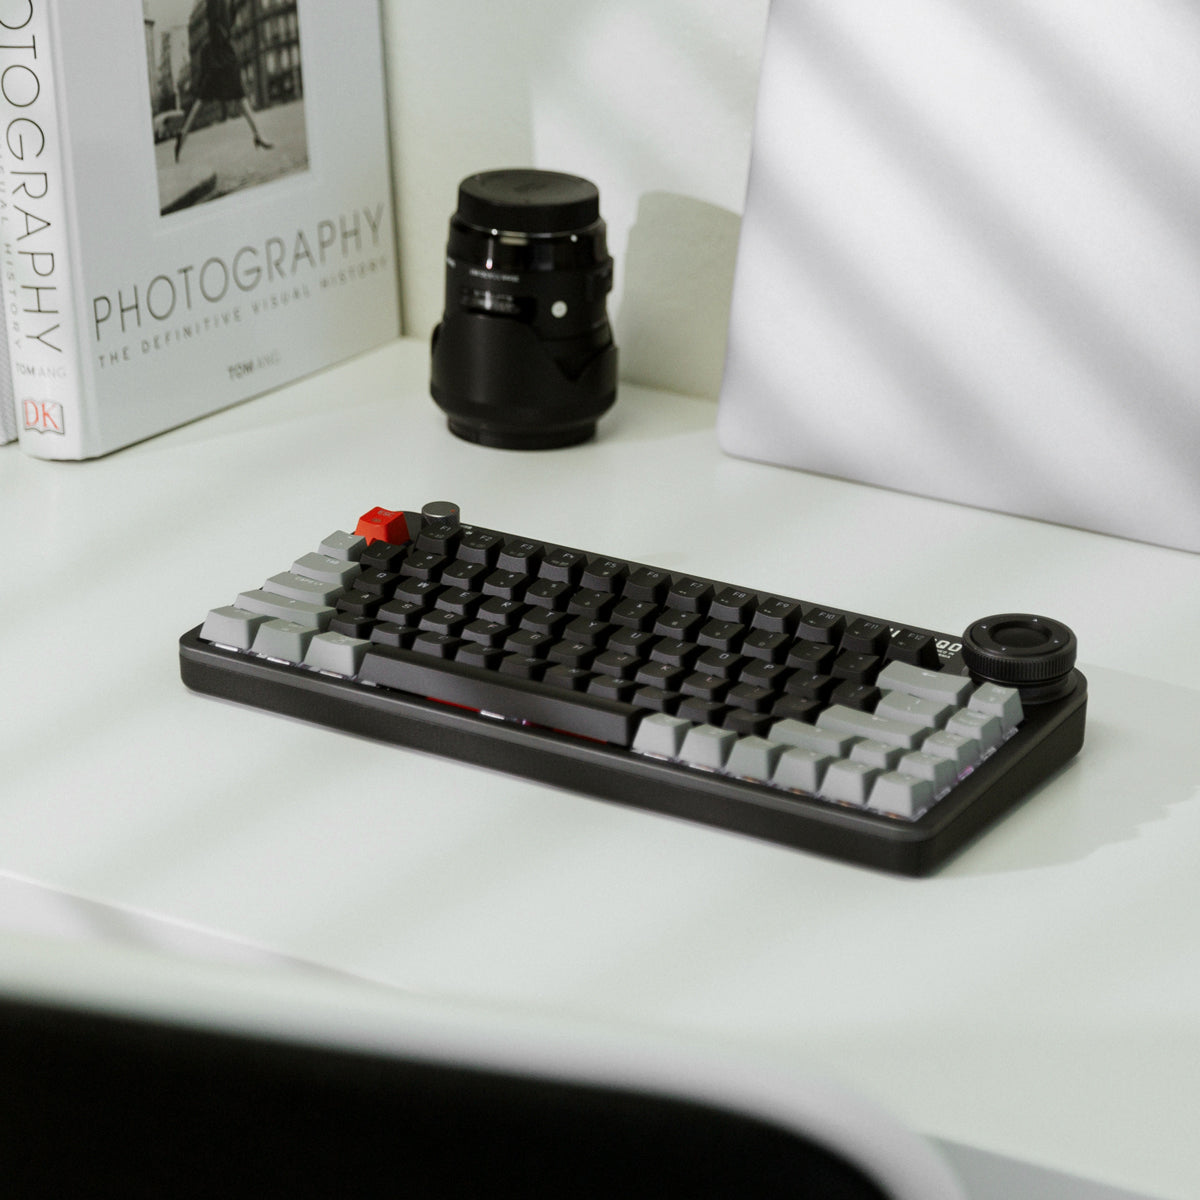 Drahtlose Hot-Swap-fähige Foqo Pro-Tastatur